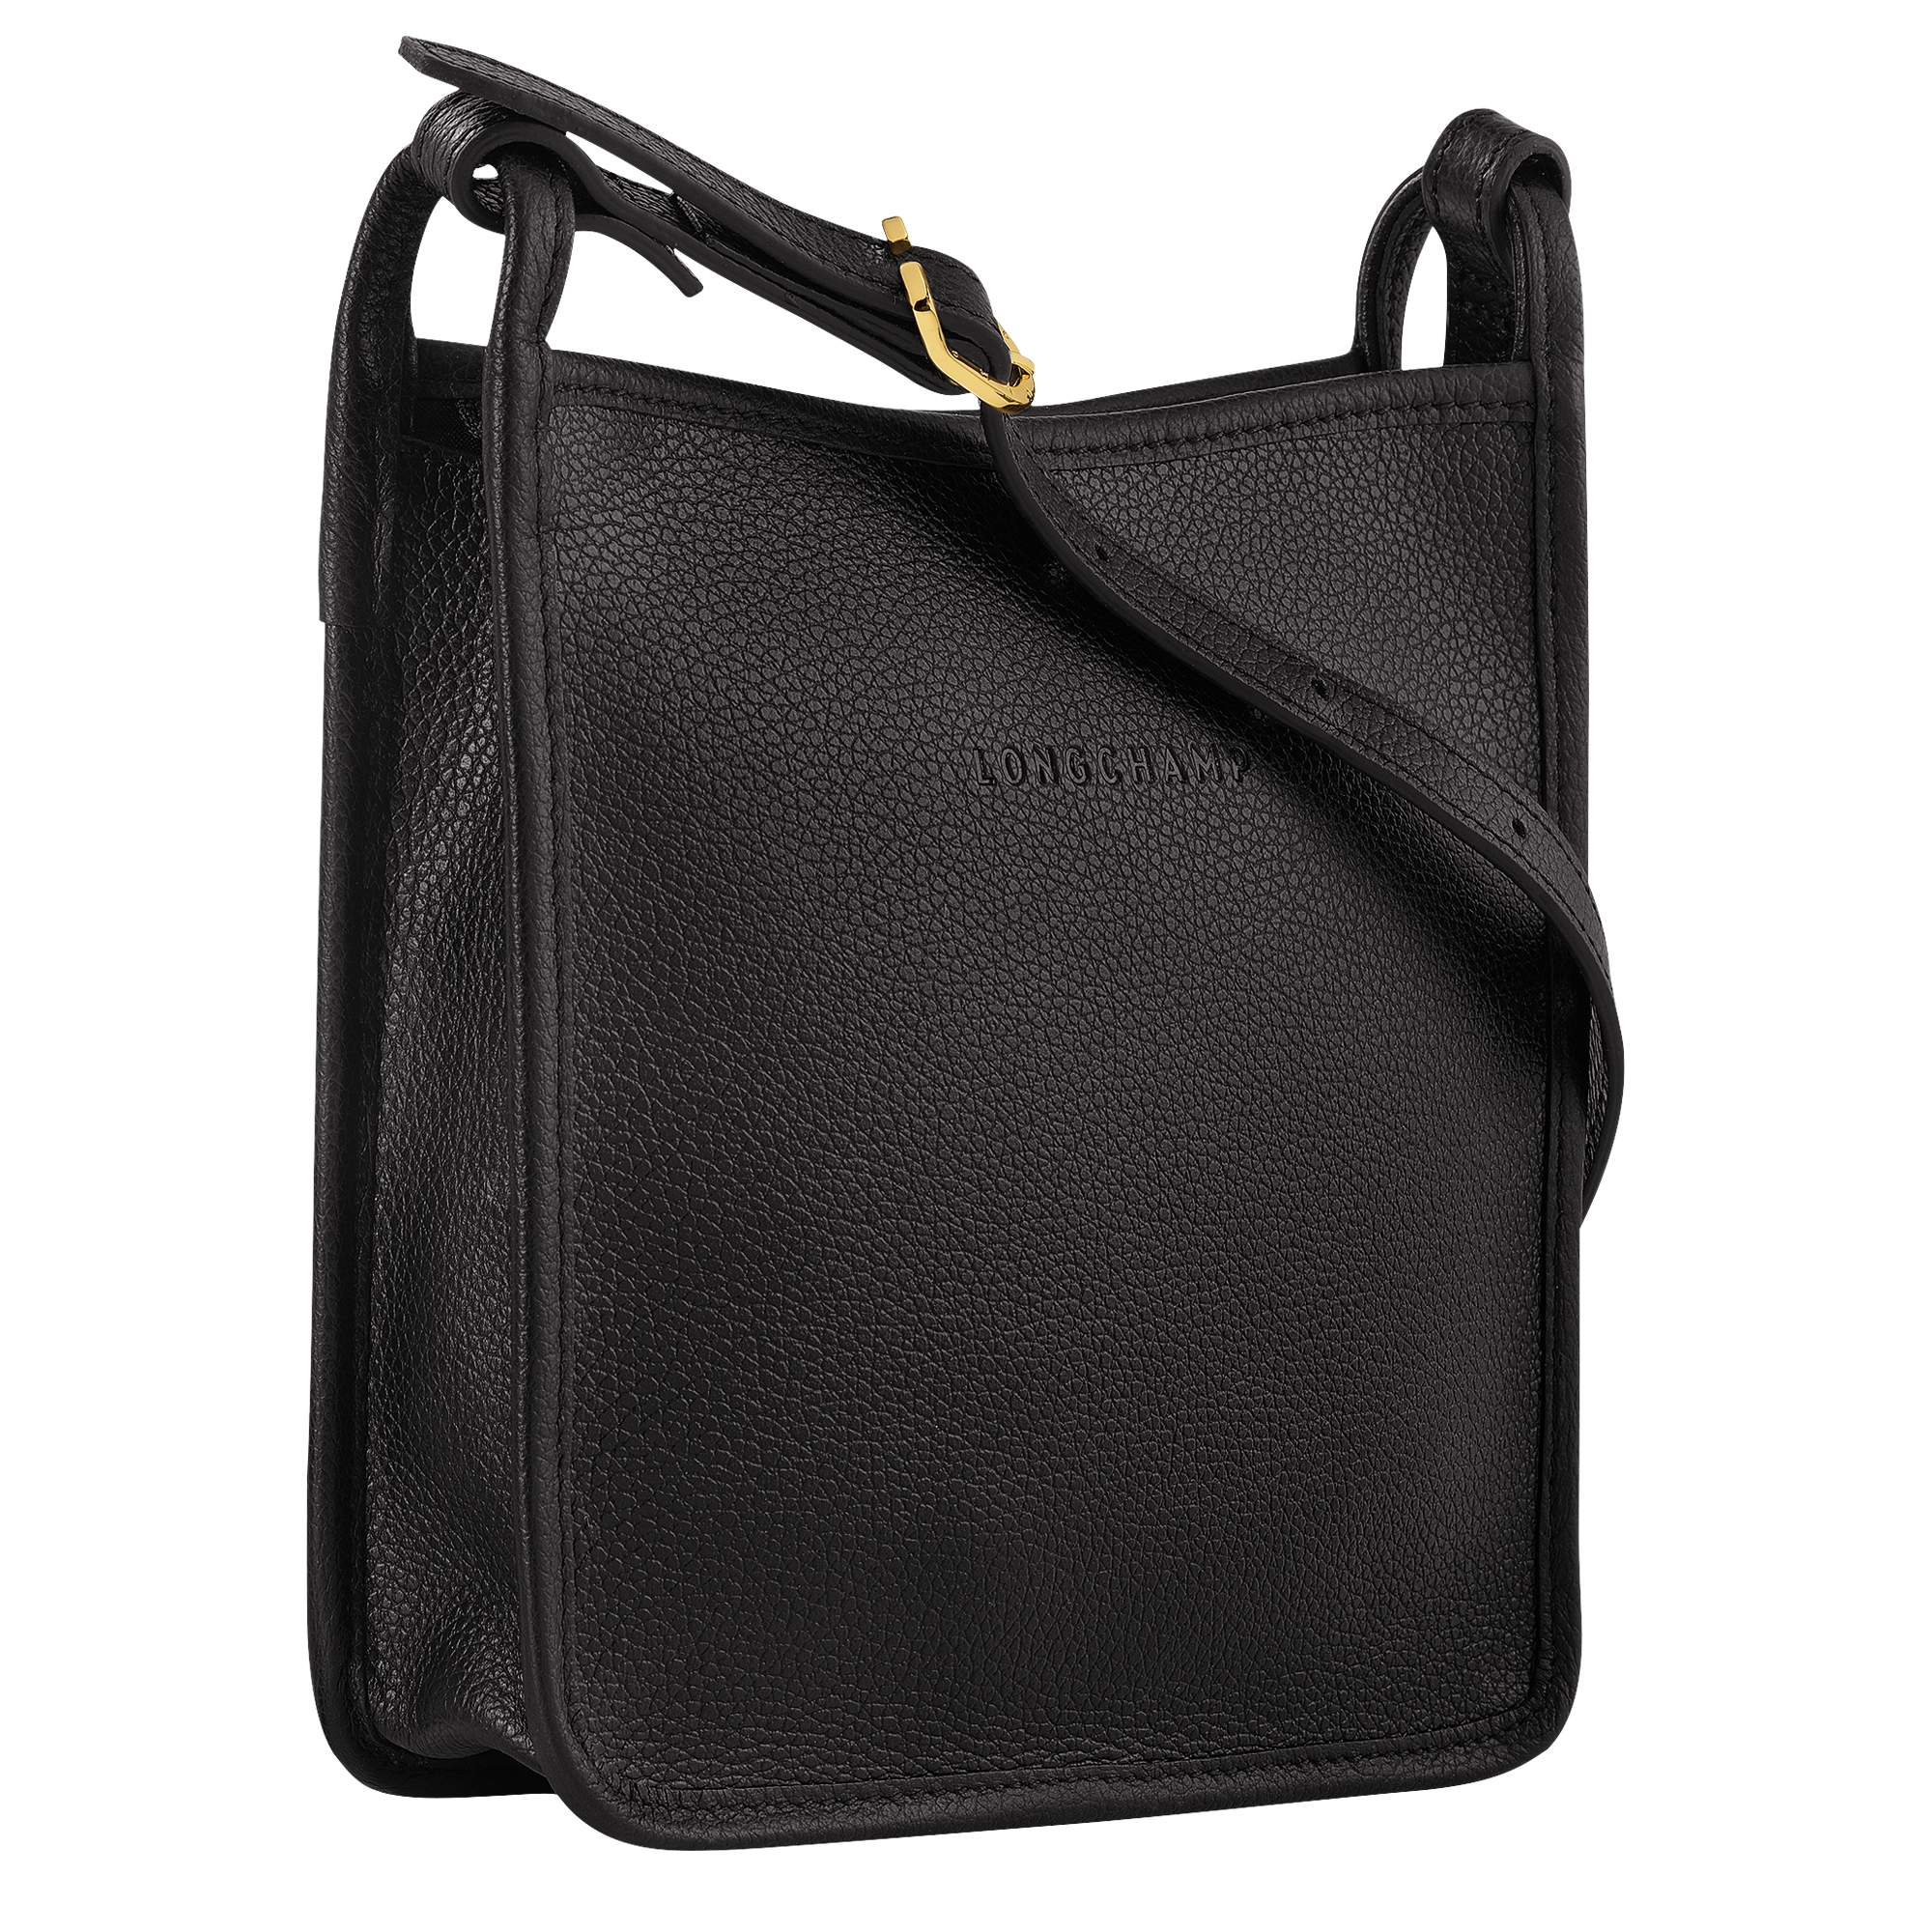 Longchamp+LE+FOULONNE+Leather+Crossbody+Bag+Black+-+Small for sale online